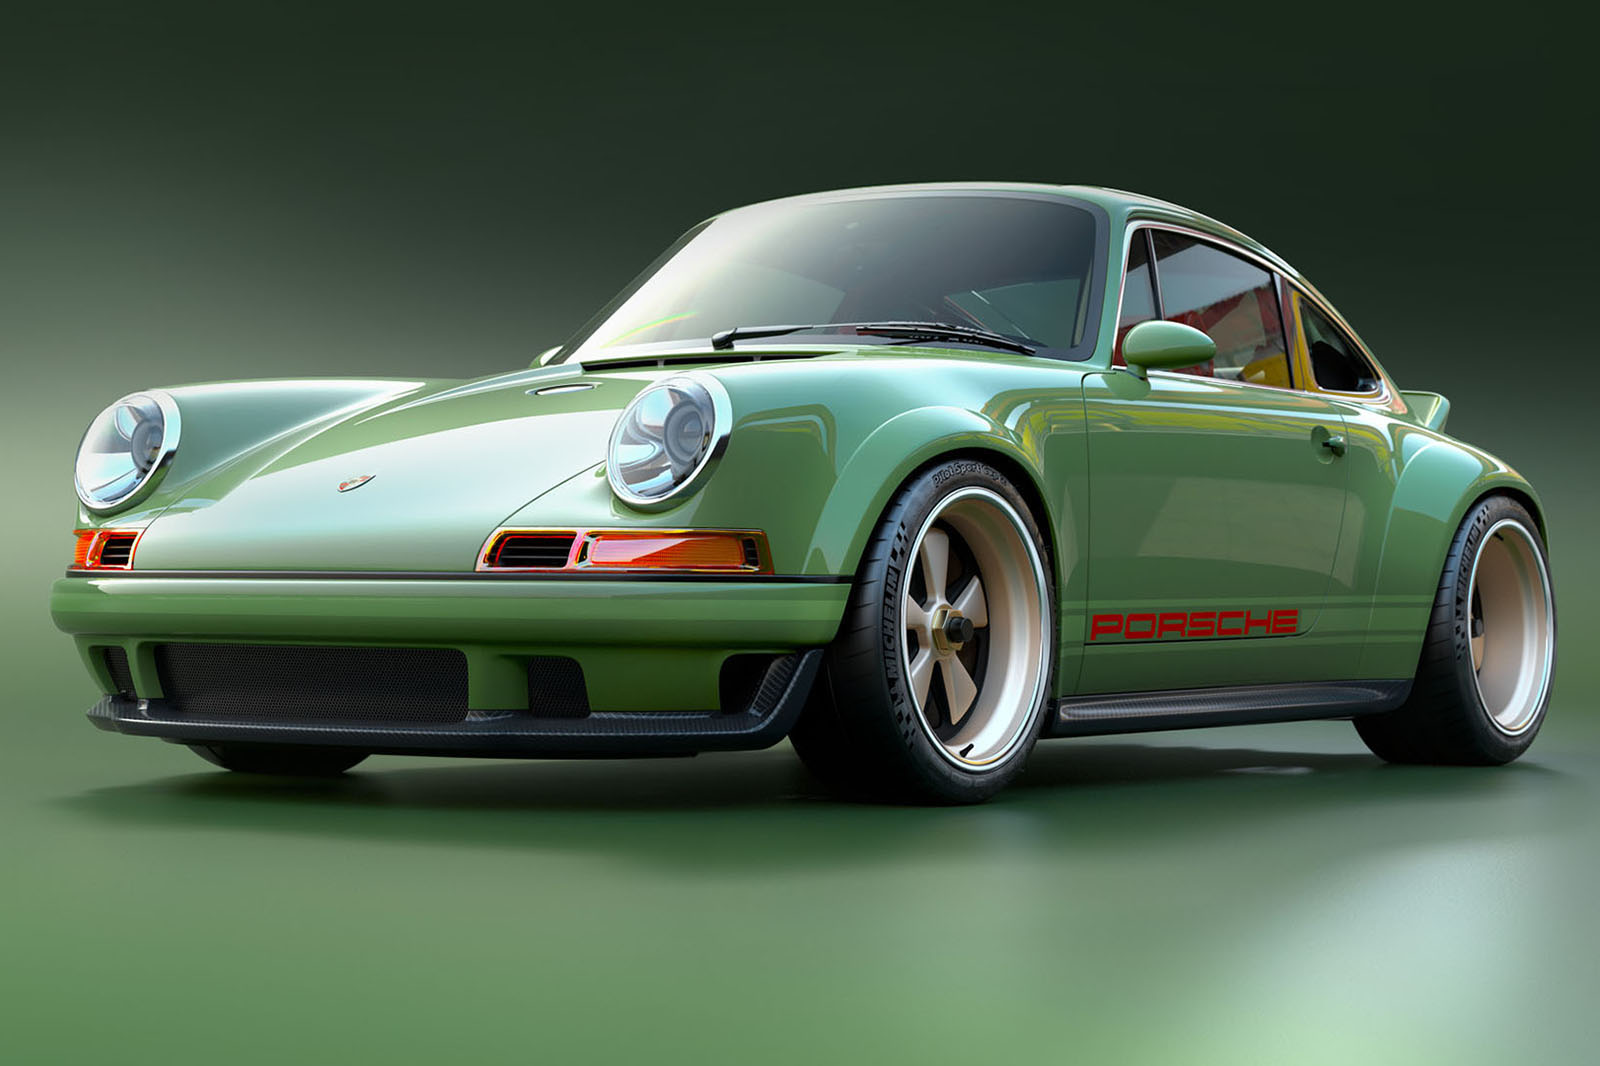 Singer and Williams reveal 493bhp restored Porsche 911 | Autocar